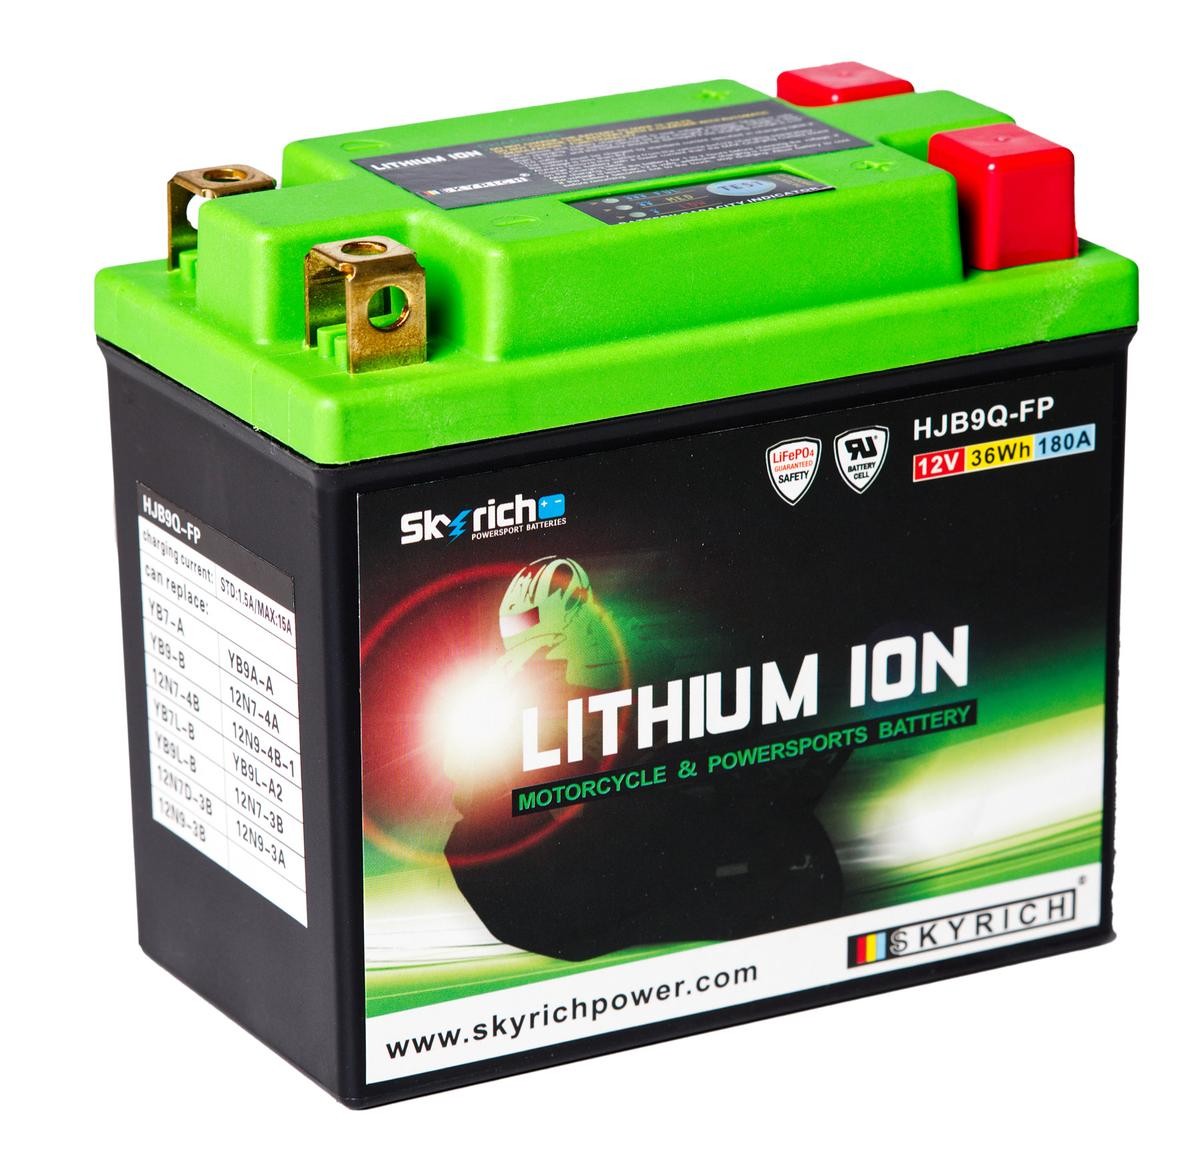 PIAGGIO BEVERLY Batterie 12V 3Ah 180A N Li-Ionen-Batterie SKYRICH LITHIUM ION HJB9Q-FP